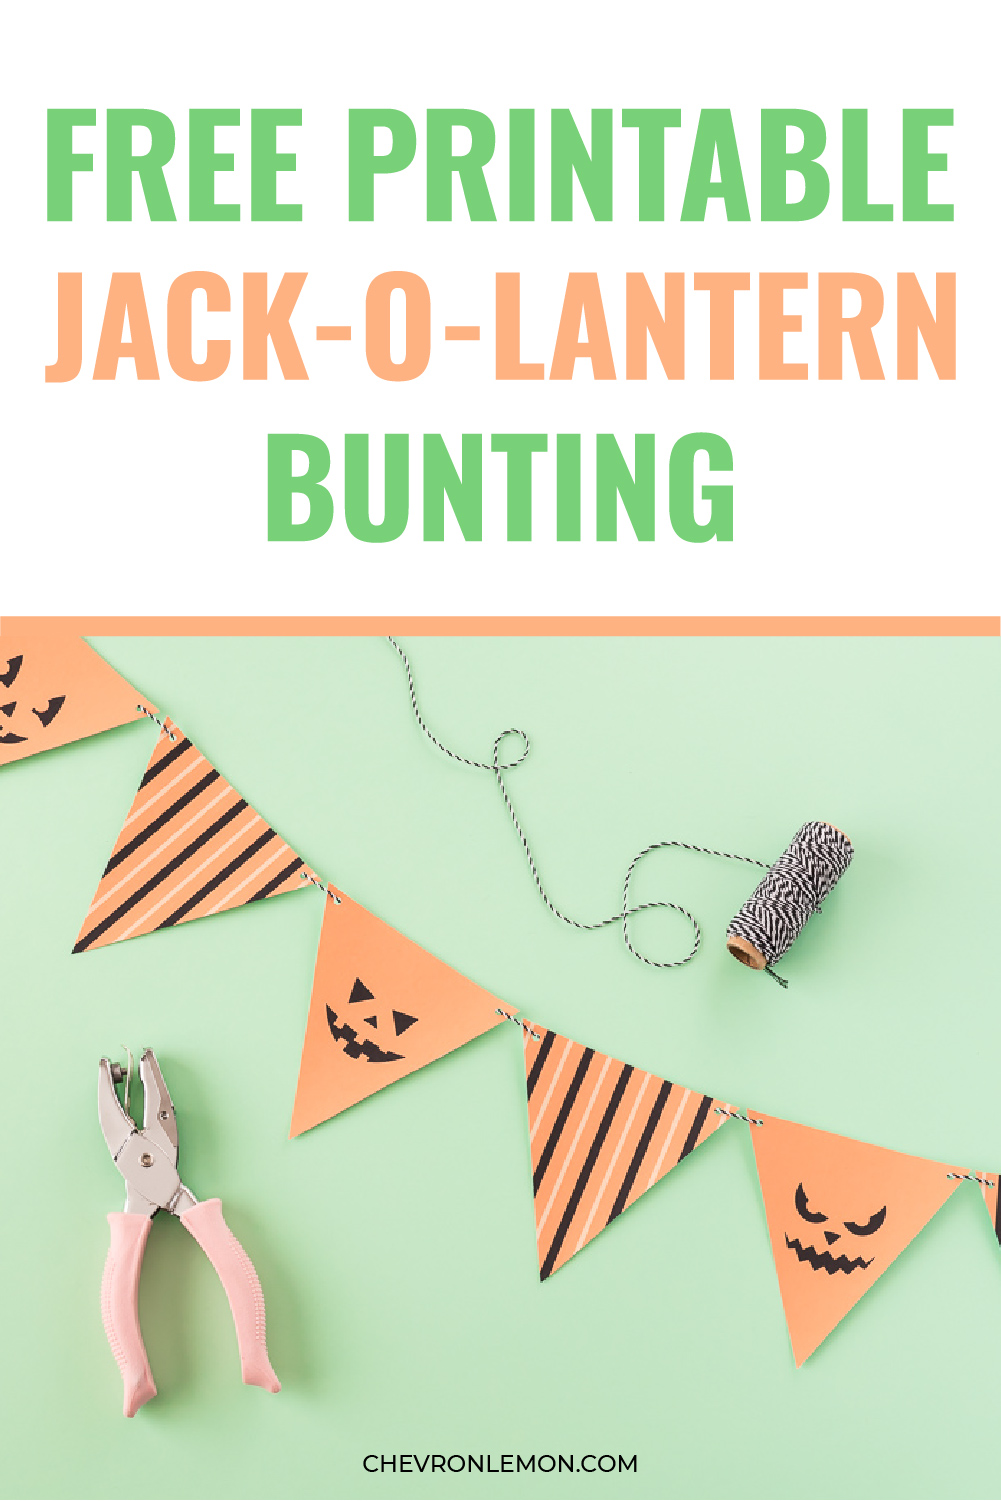 Jack-o-lantern bunting